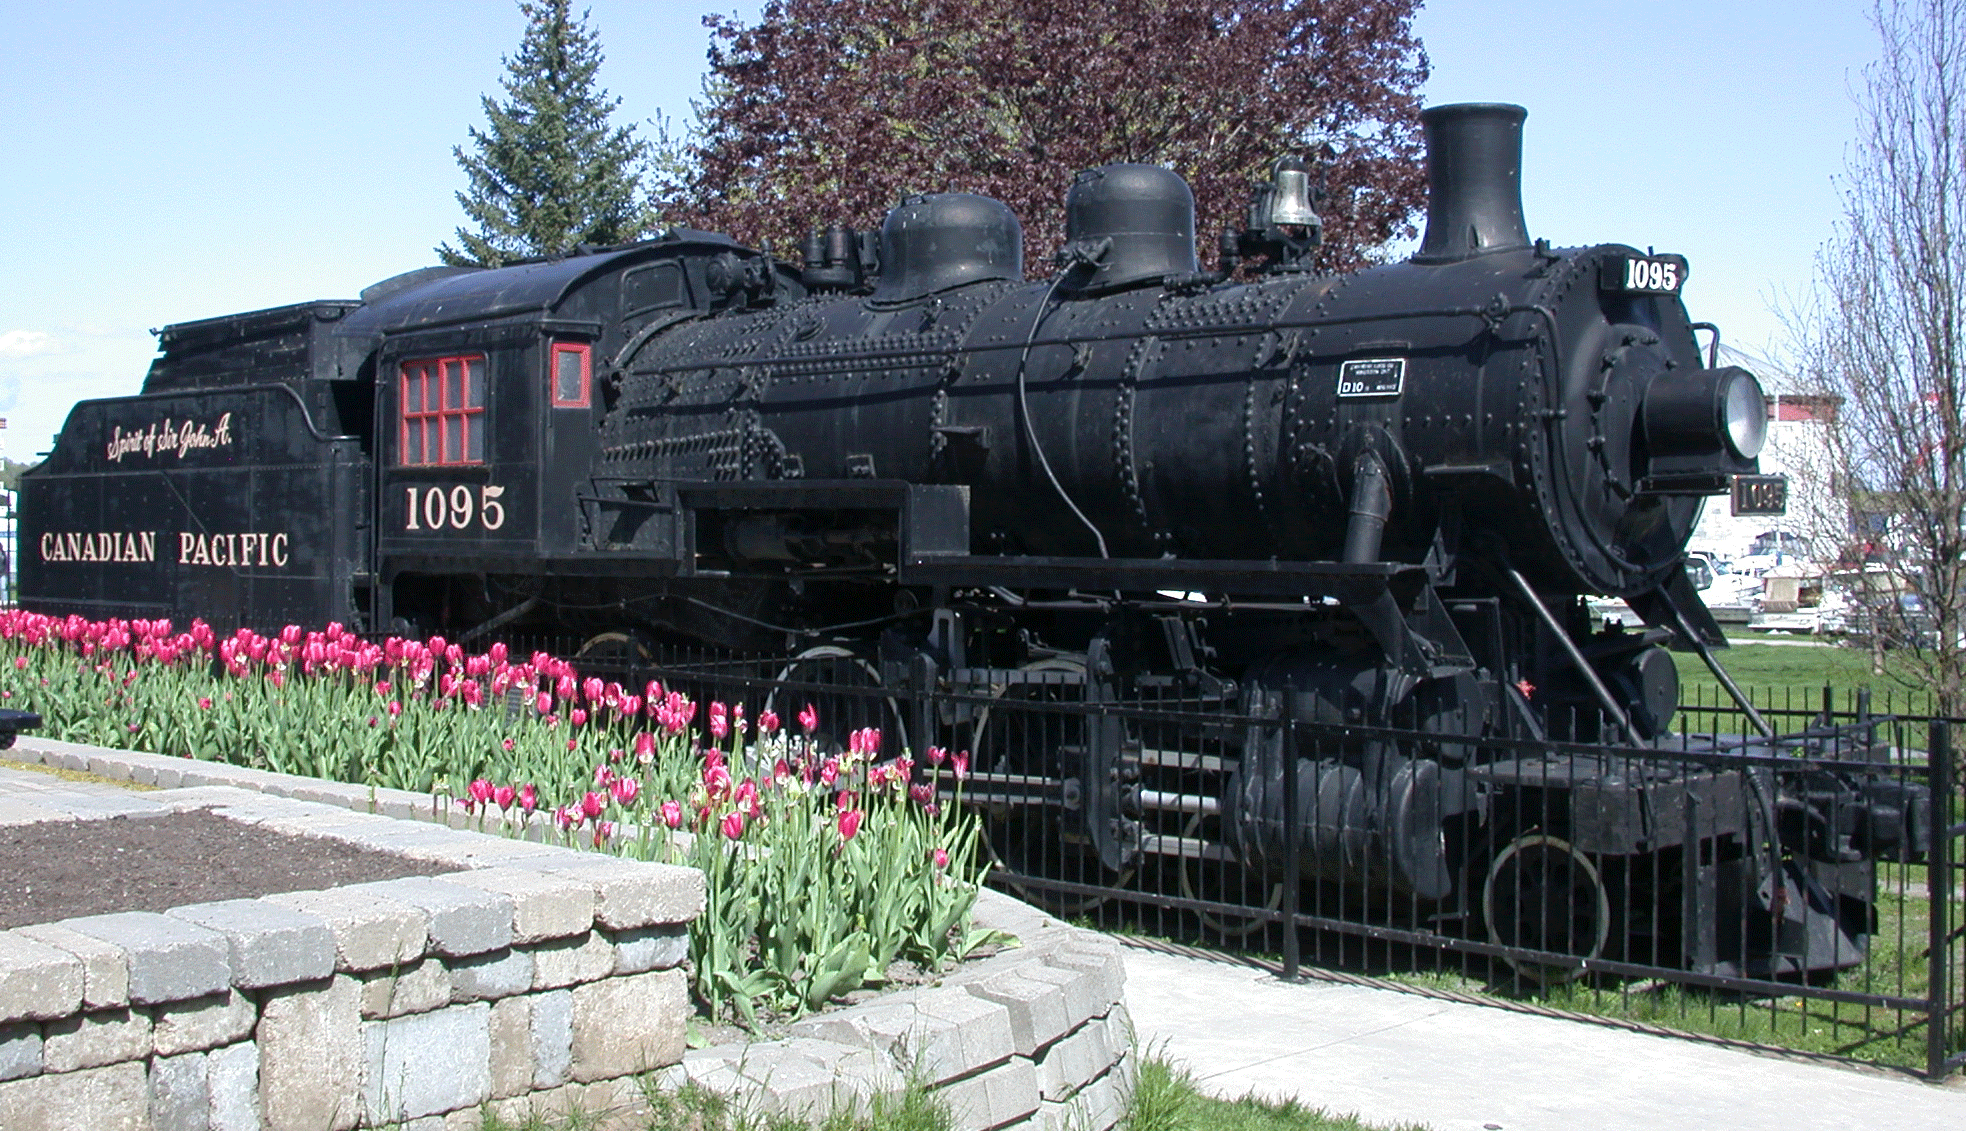 Locomotive-on-display-at-Confederation-Basin-downtown-Kingston